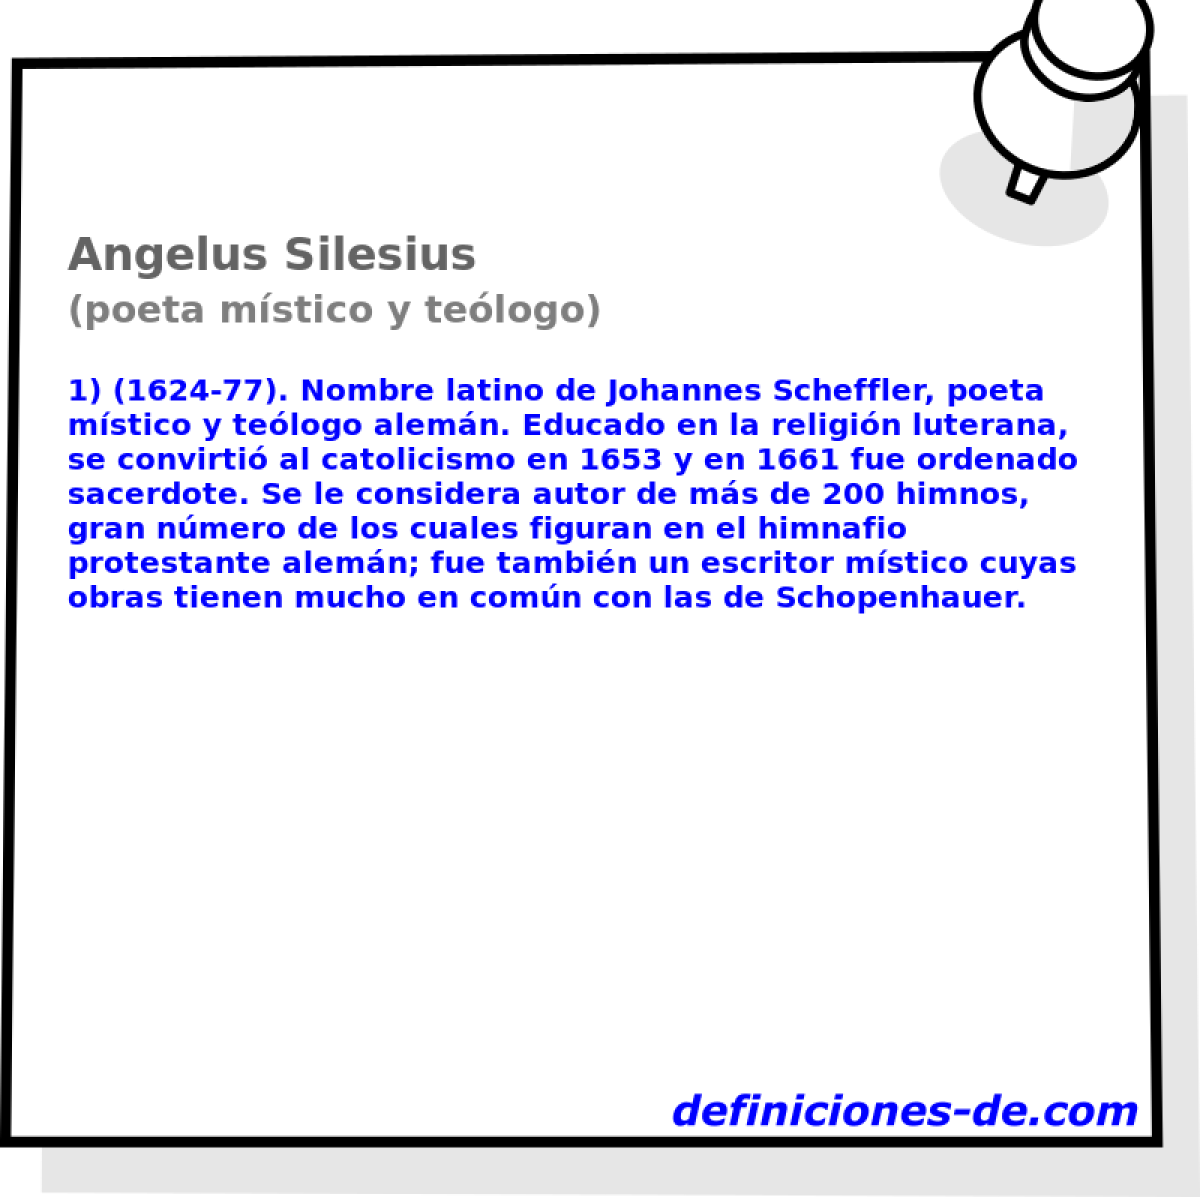 Angelus Silesius (poeta mstico y telogo)